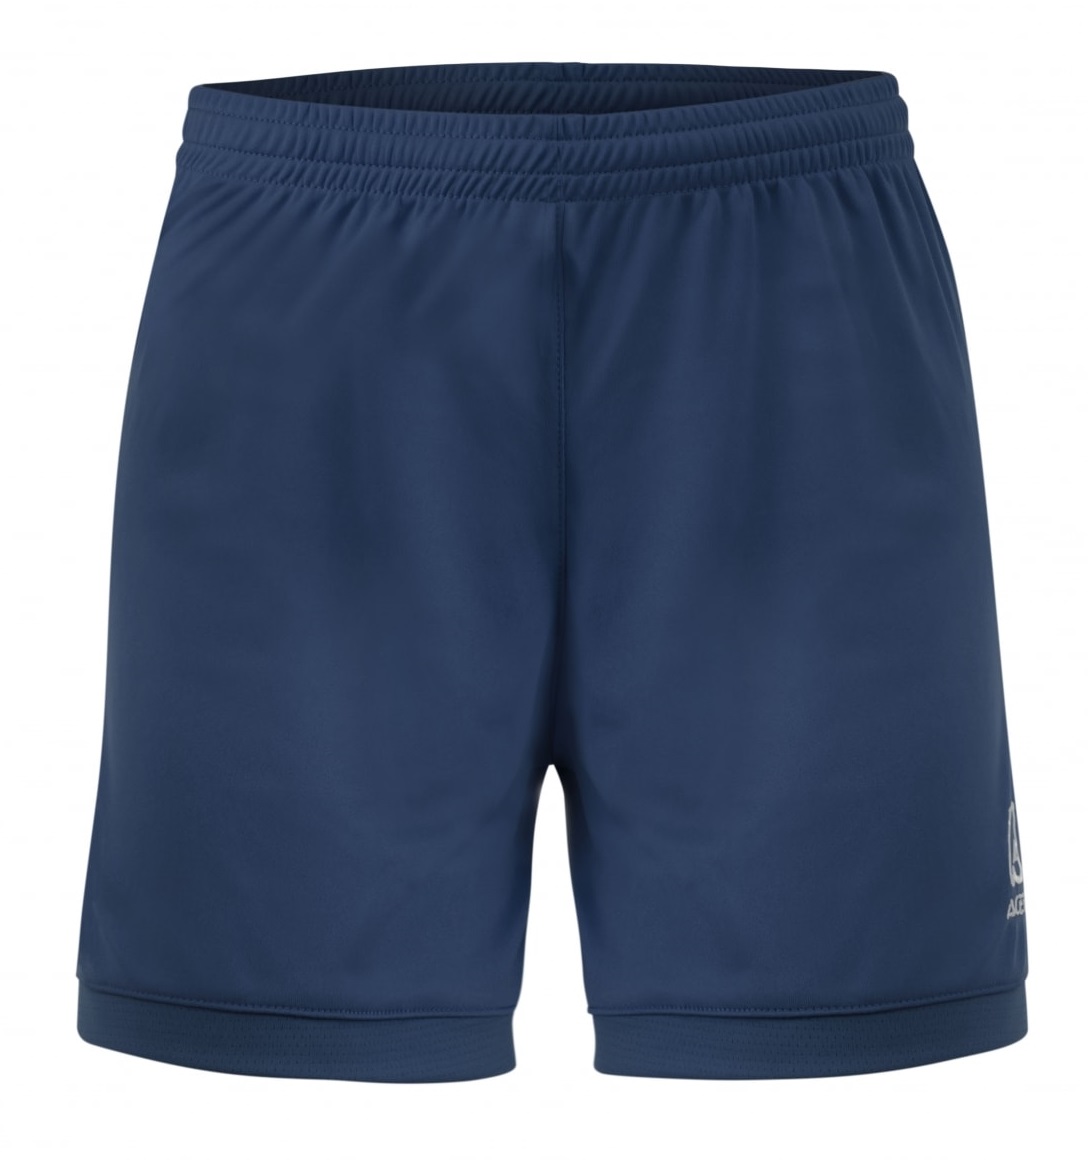 Pantalones cortos azules deporte Sprinter